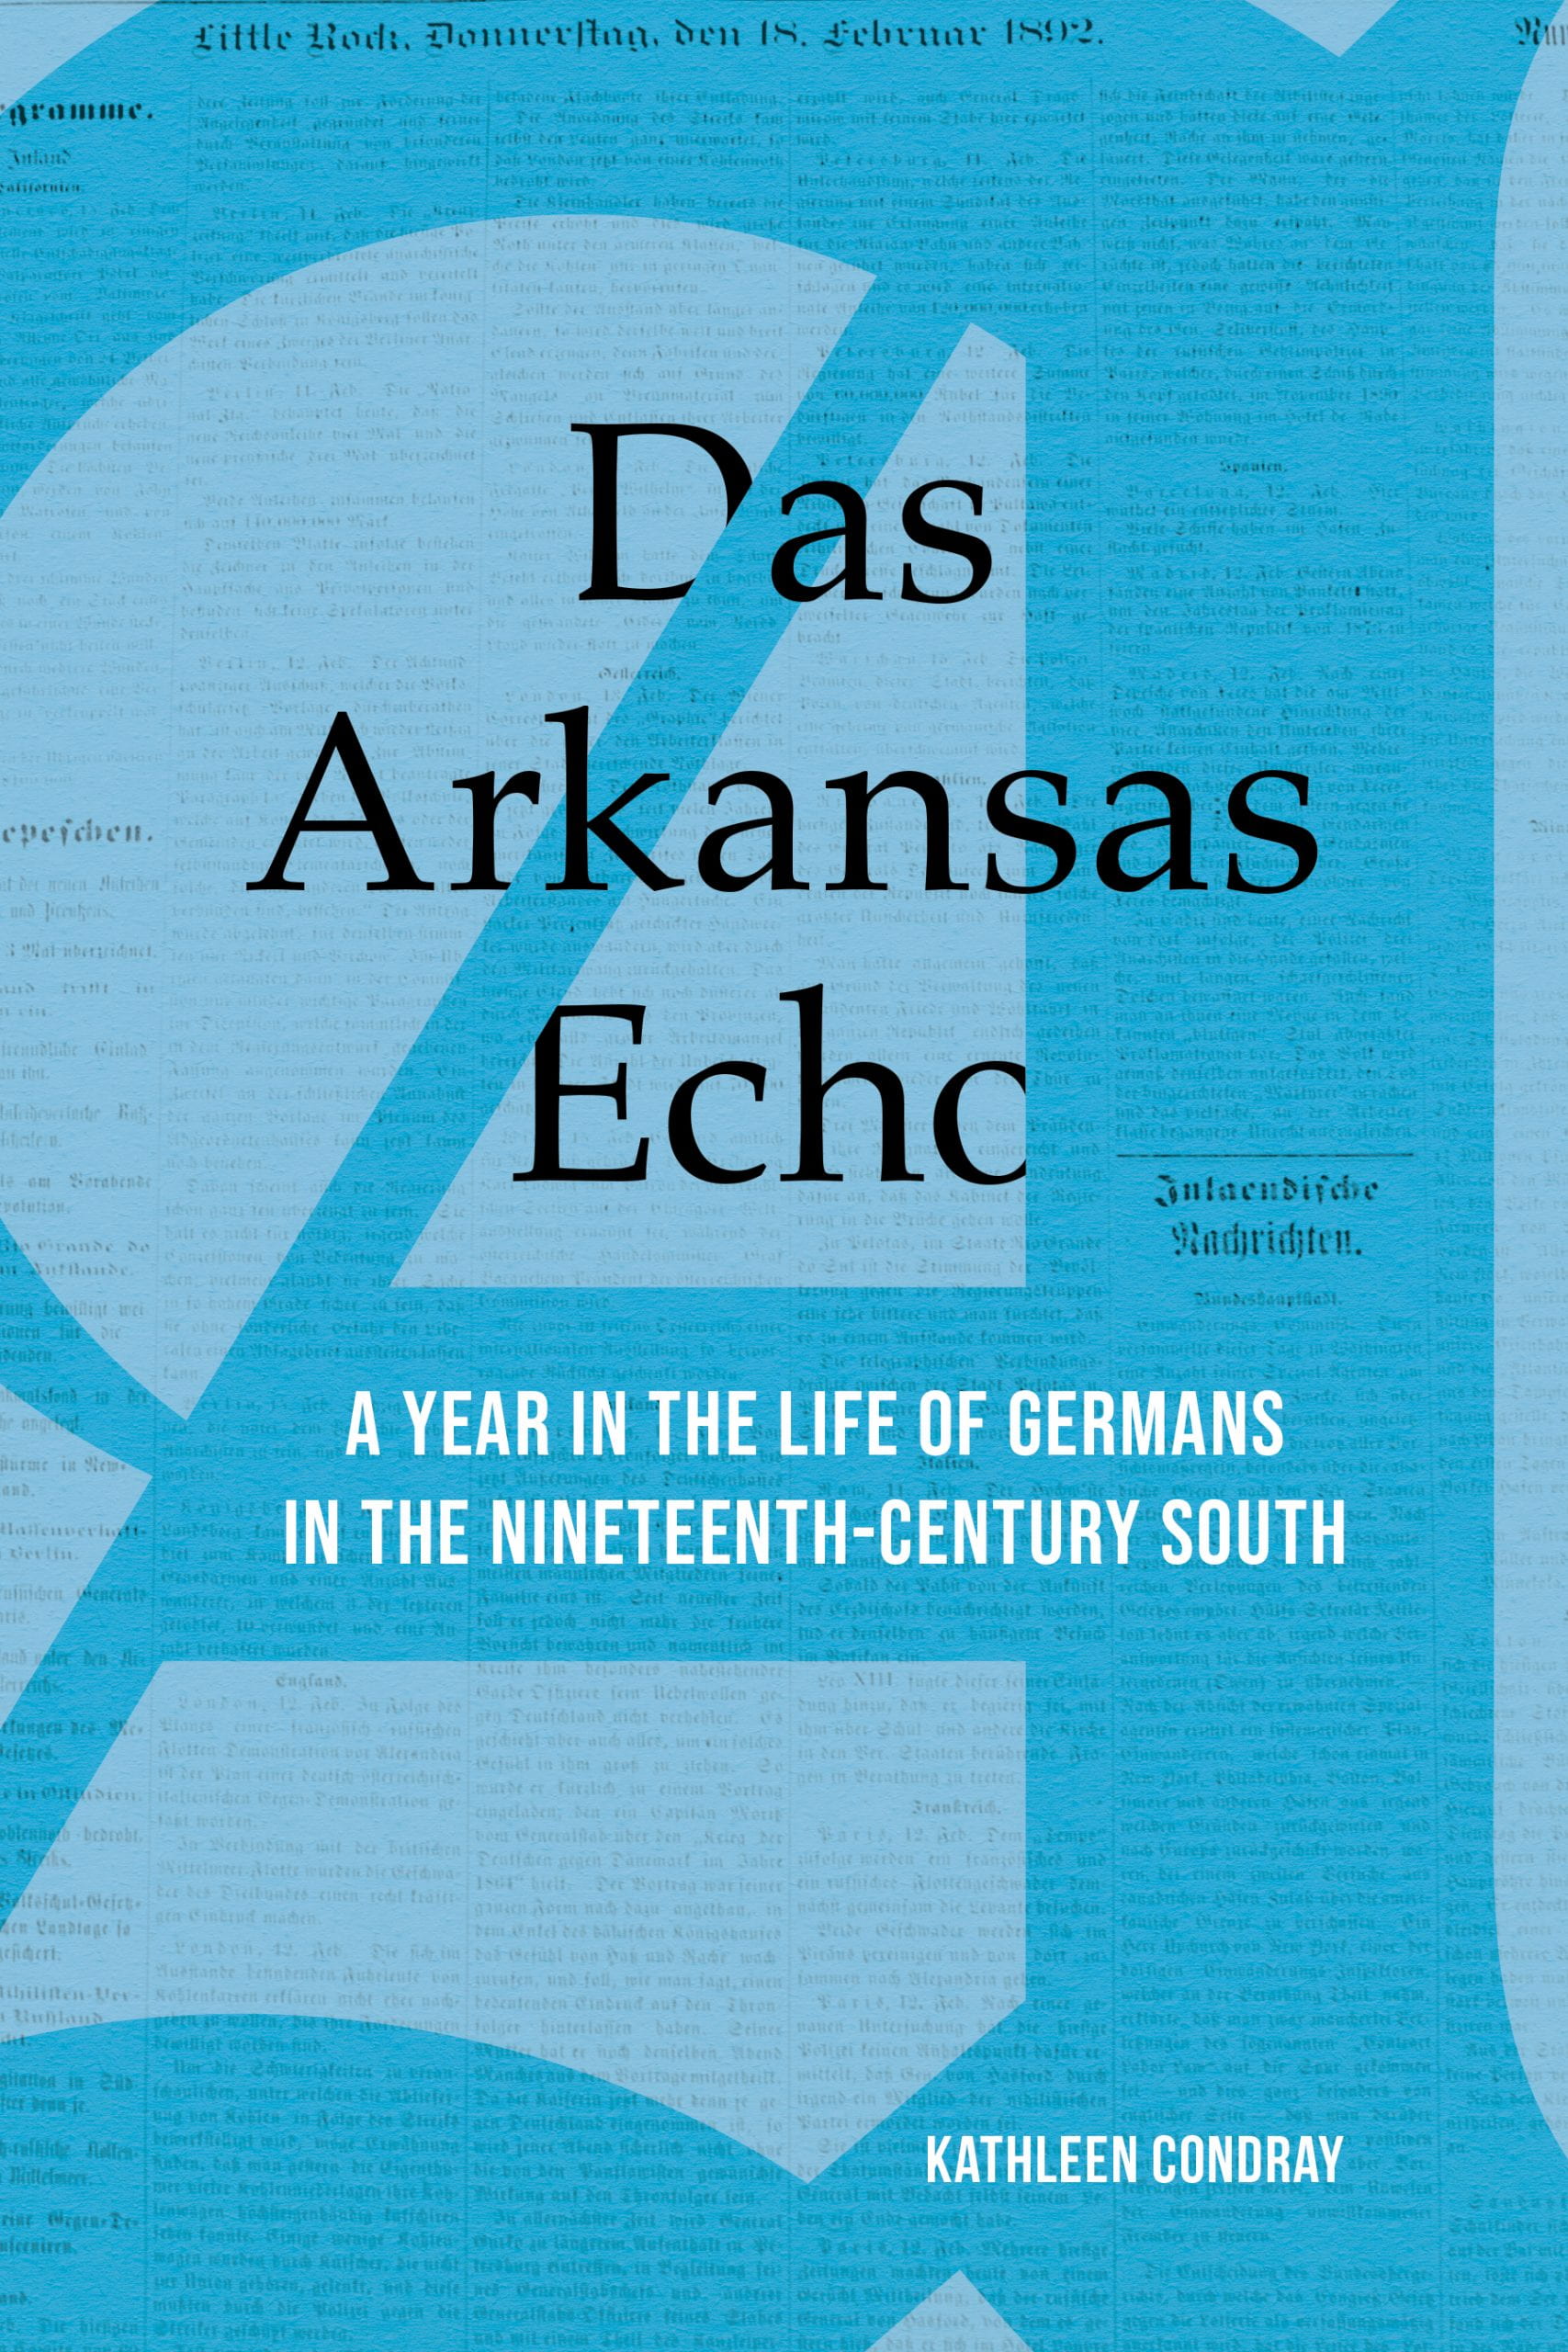 cover image for Das Arkansas Echo by Kathleen Condray